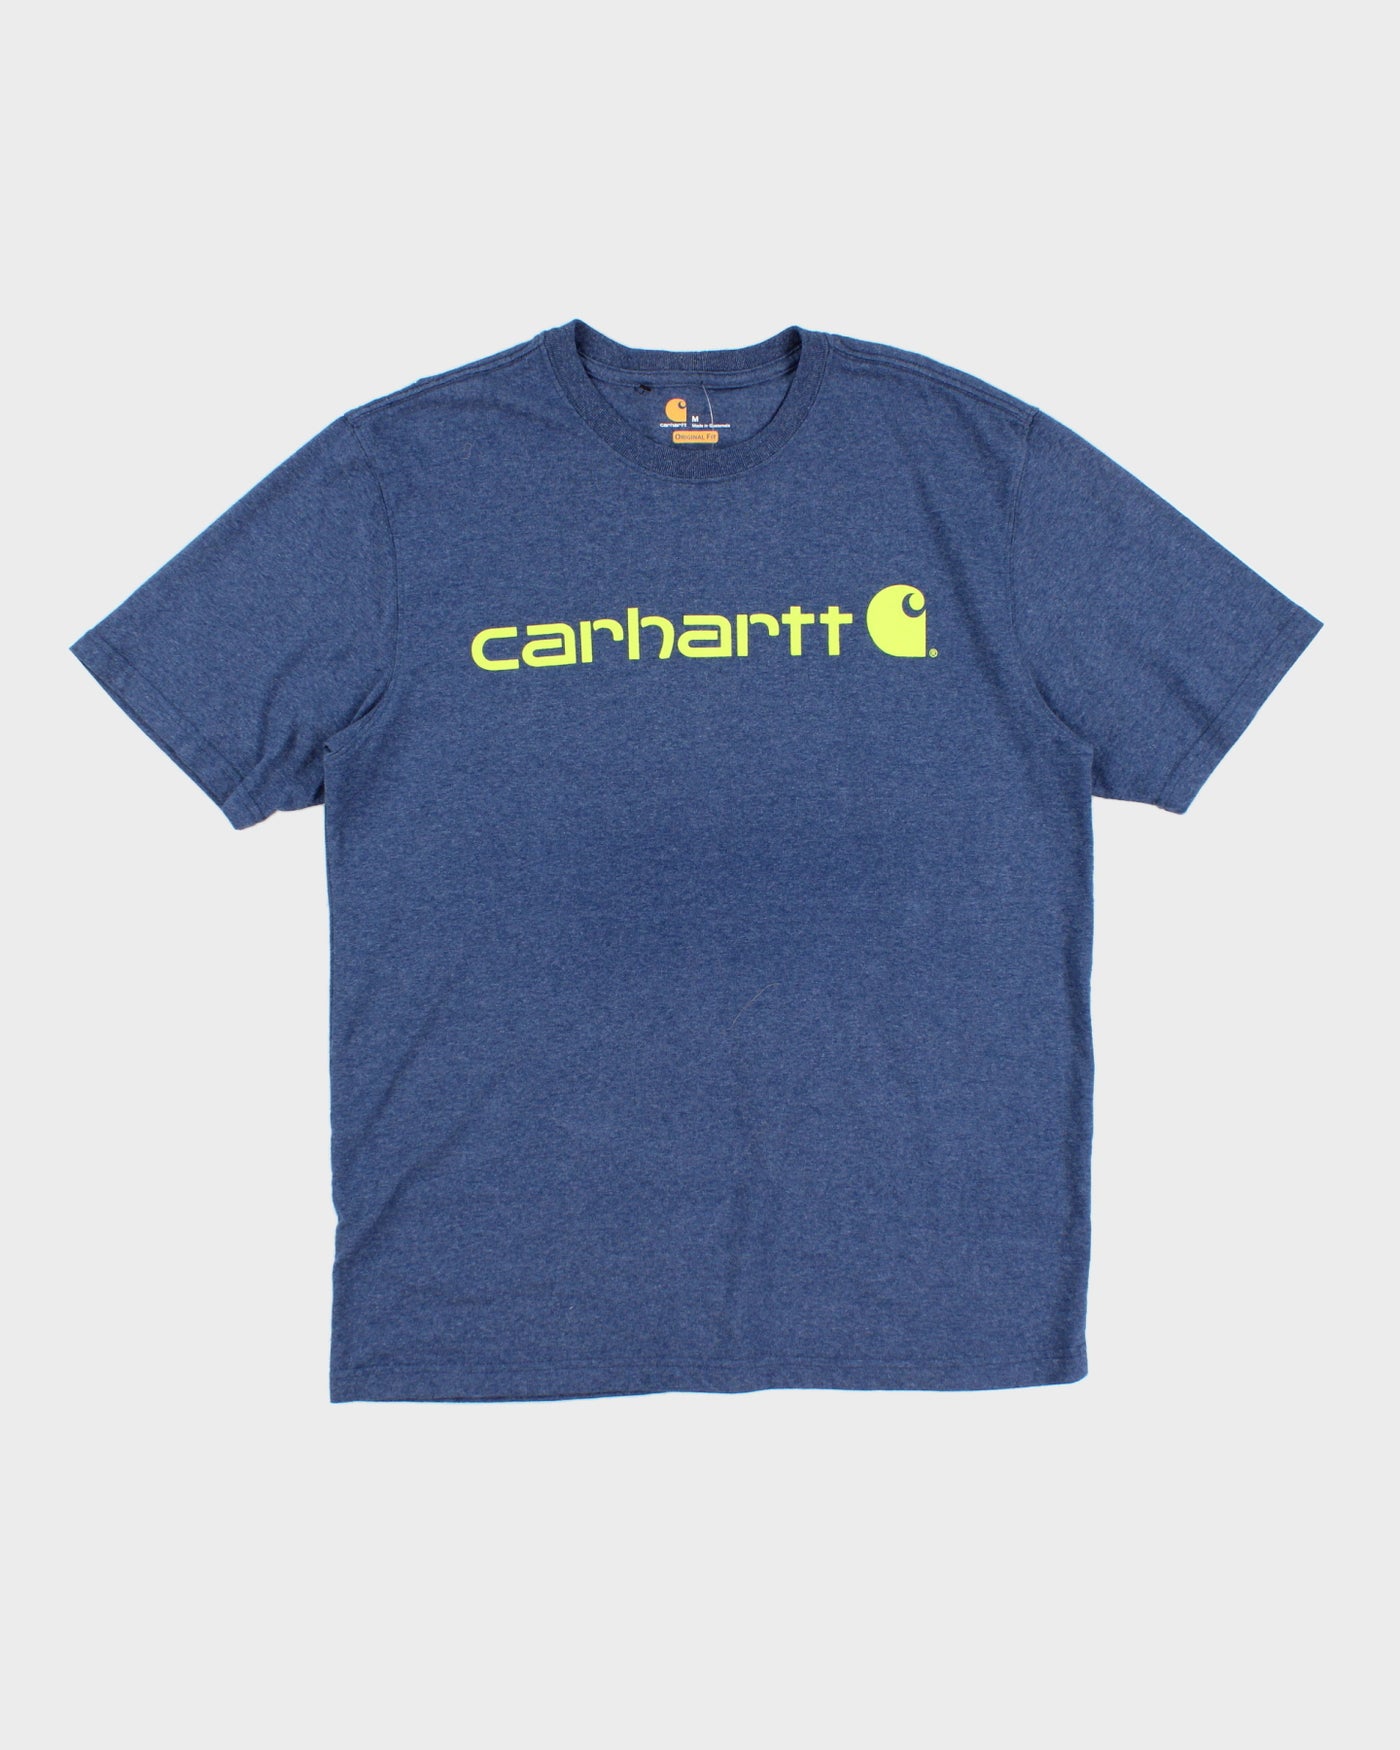 Carhartt Graphic T Shirt - M